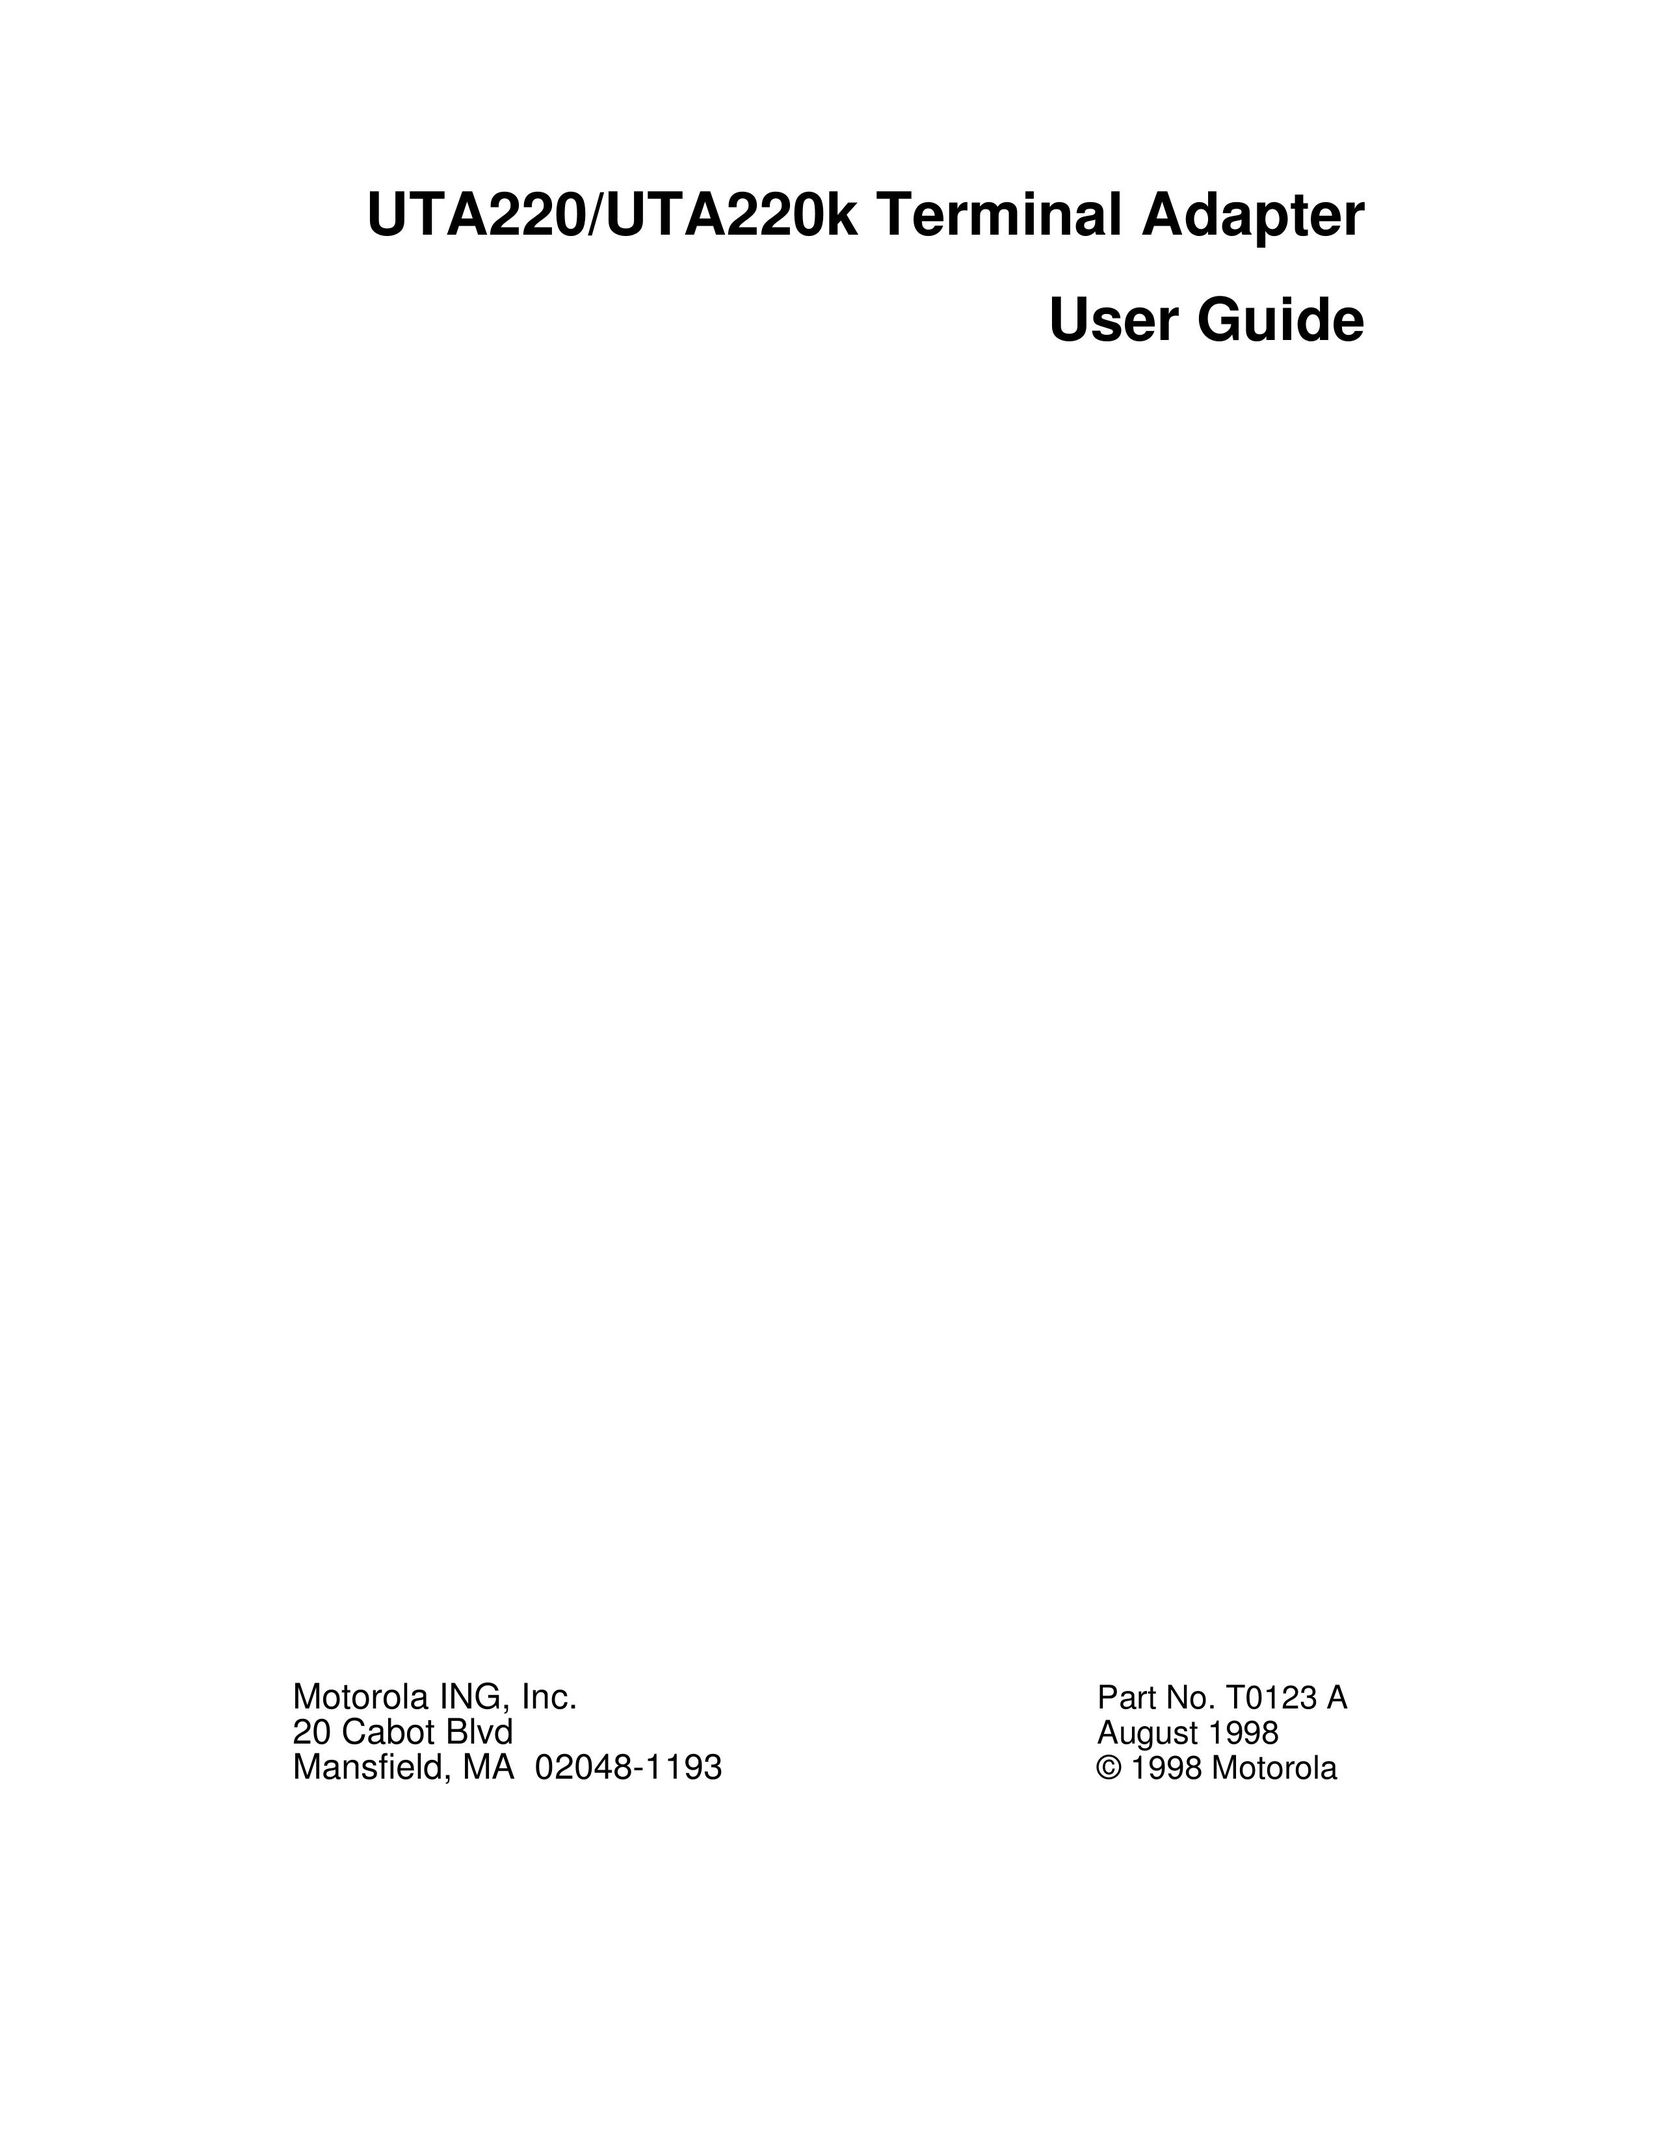 Northern UTA220/UTA220k Network Card User Manual